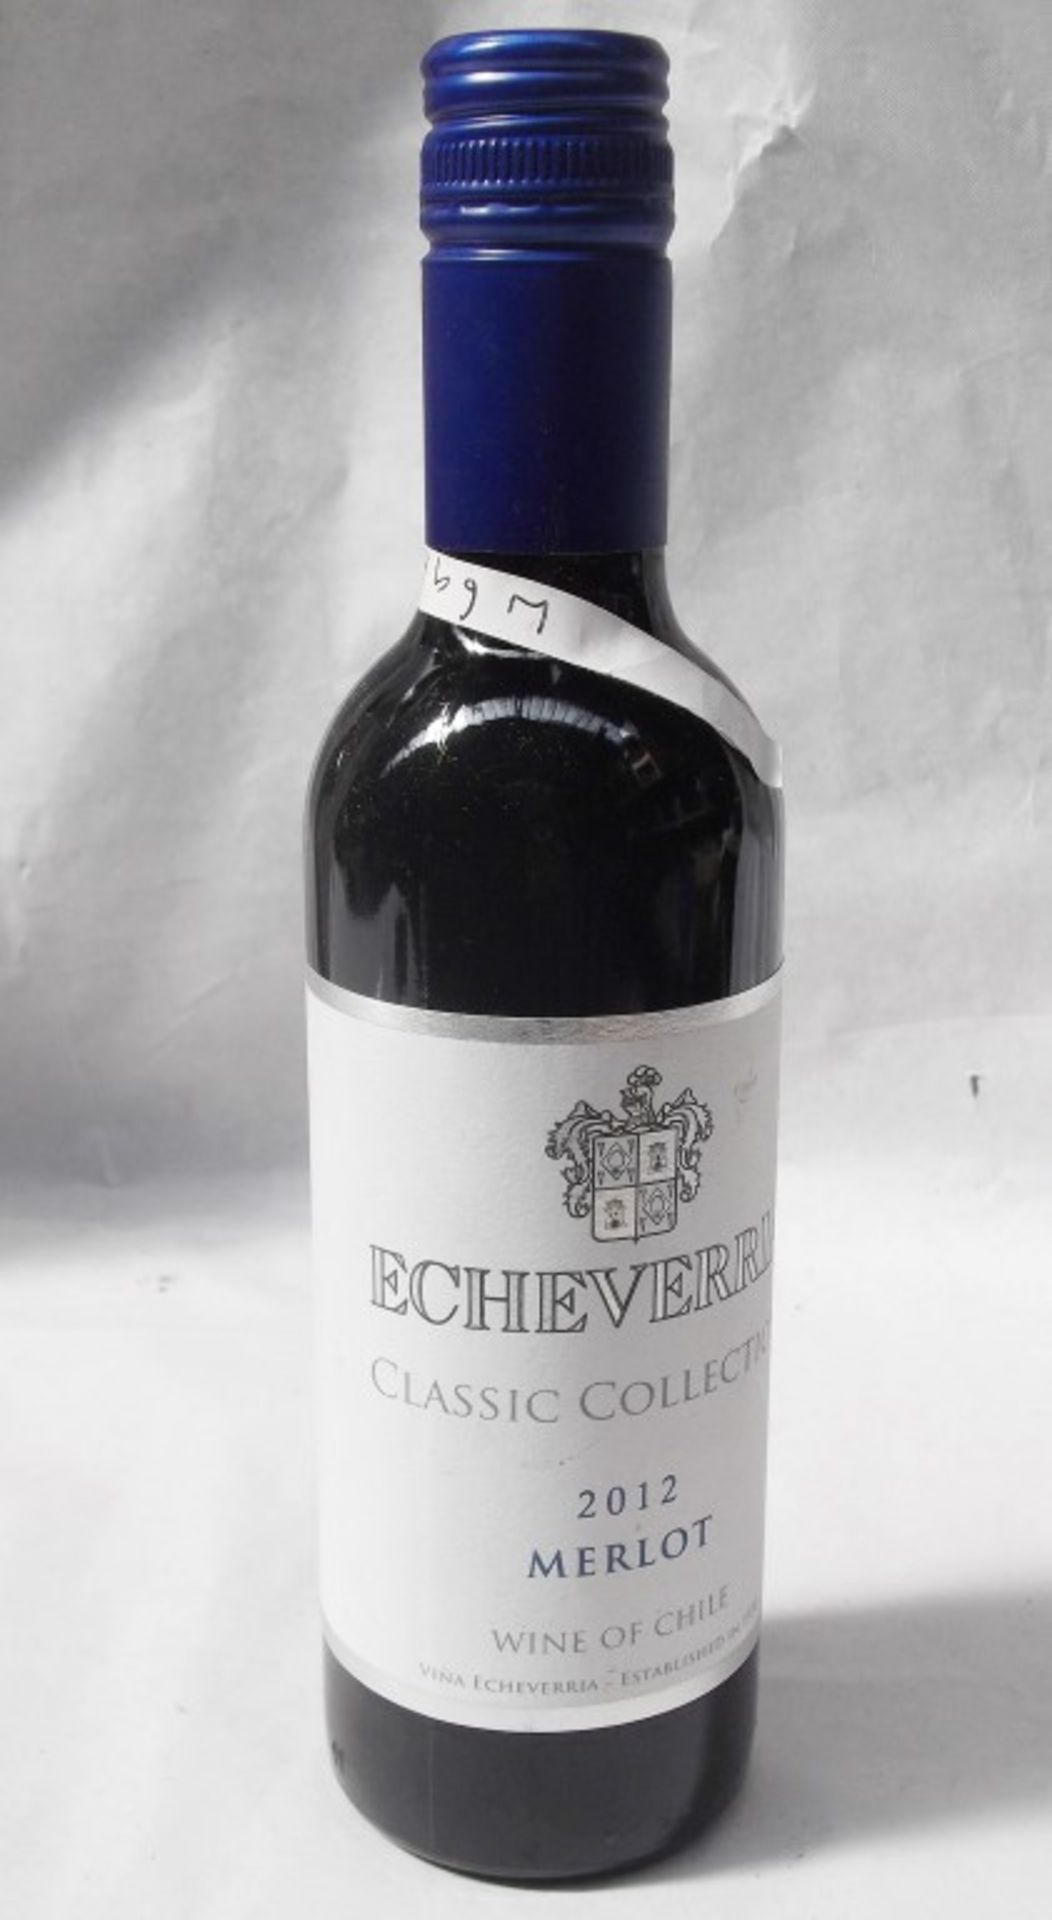 1 x Echeverria Classic Collection Merlot 2012 – 2012 - 375ml Bottle - Volume 13.5% - Ref W698 -